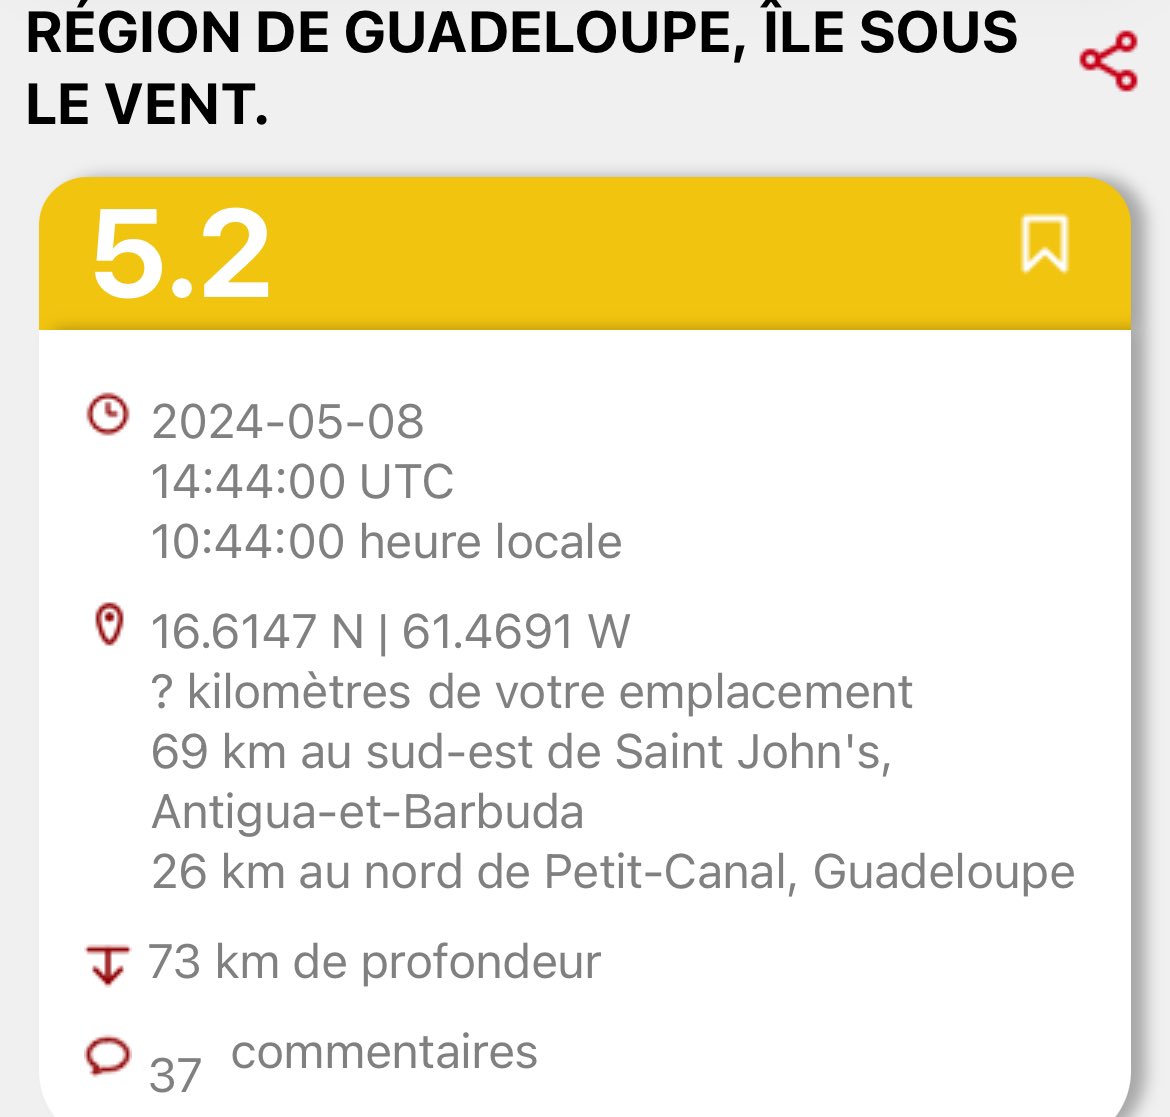 #Séisme🔴🔴🔴
Magnitude 5,2 selon #LastQuake
@guadeloupela1e